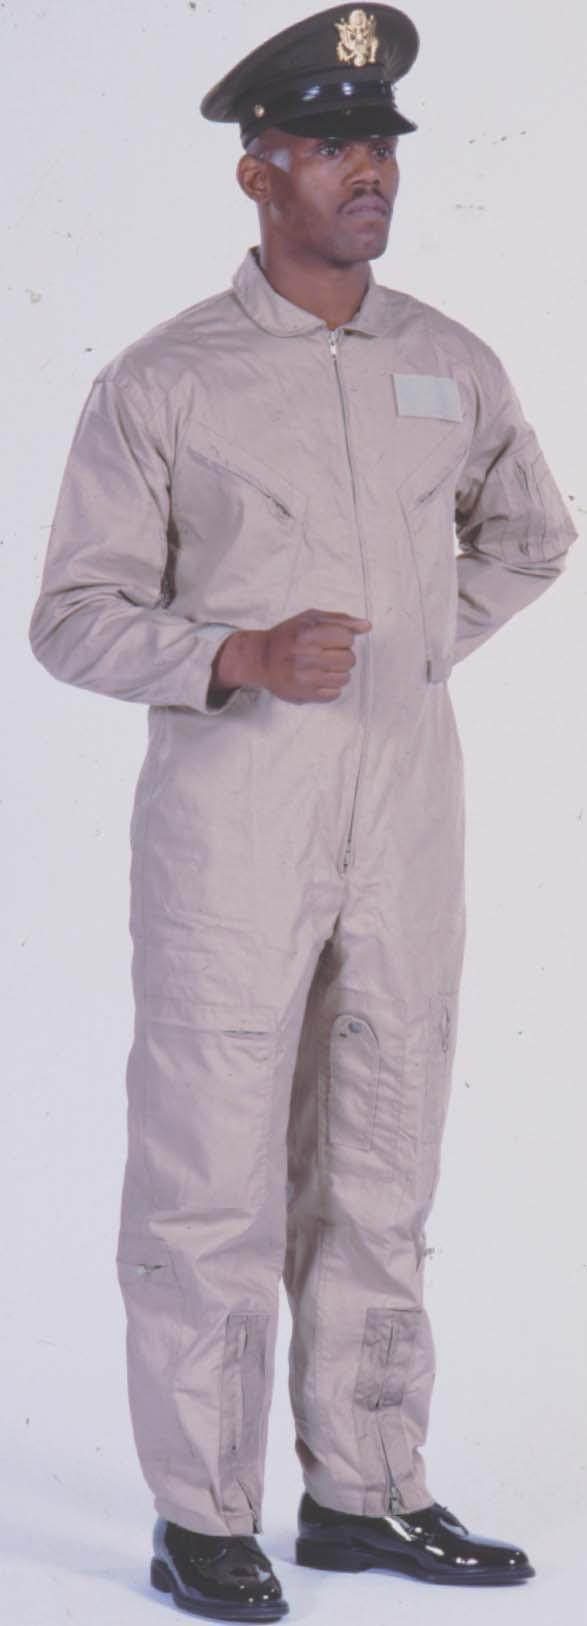 KOKOMO KHAKI JUMPSUITS *One piece deployment suit *Fabric; Dac/Cotton blend *Permo Press washable *Elastic waist *Close body fit * Pockets everywhere 1. Hellcat Light weight Poplin Sizes: XS - XL...$49.